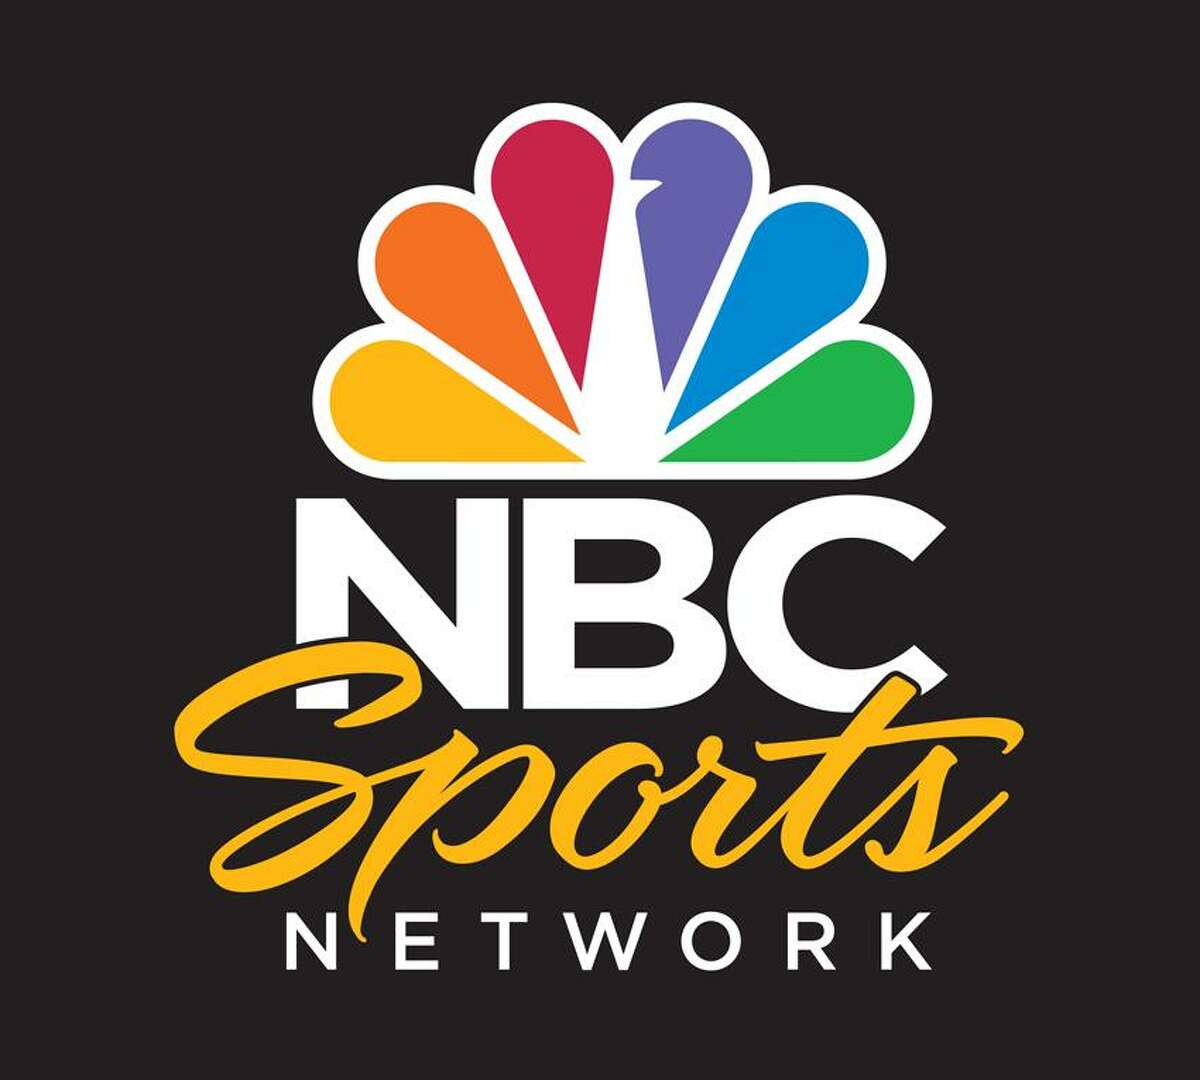 Versus rebranded as NBC Sports Network